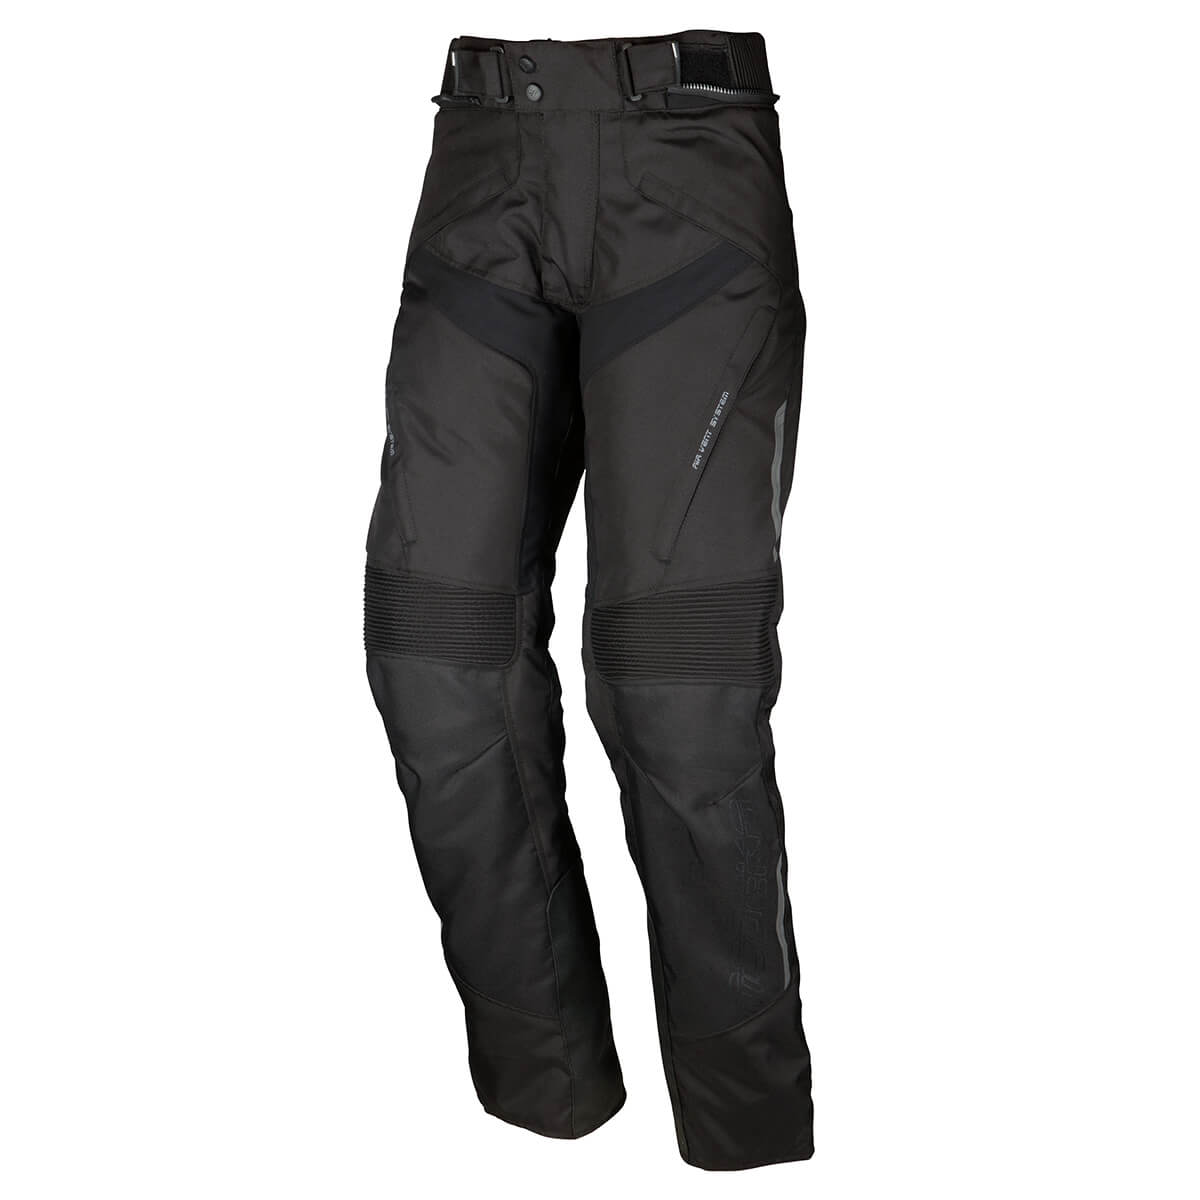 Image of Modeka Clonic Trousers Black Size 4XL ID 4045765163122